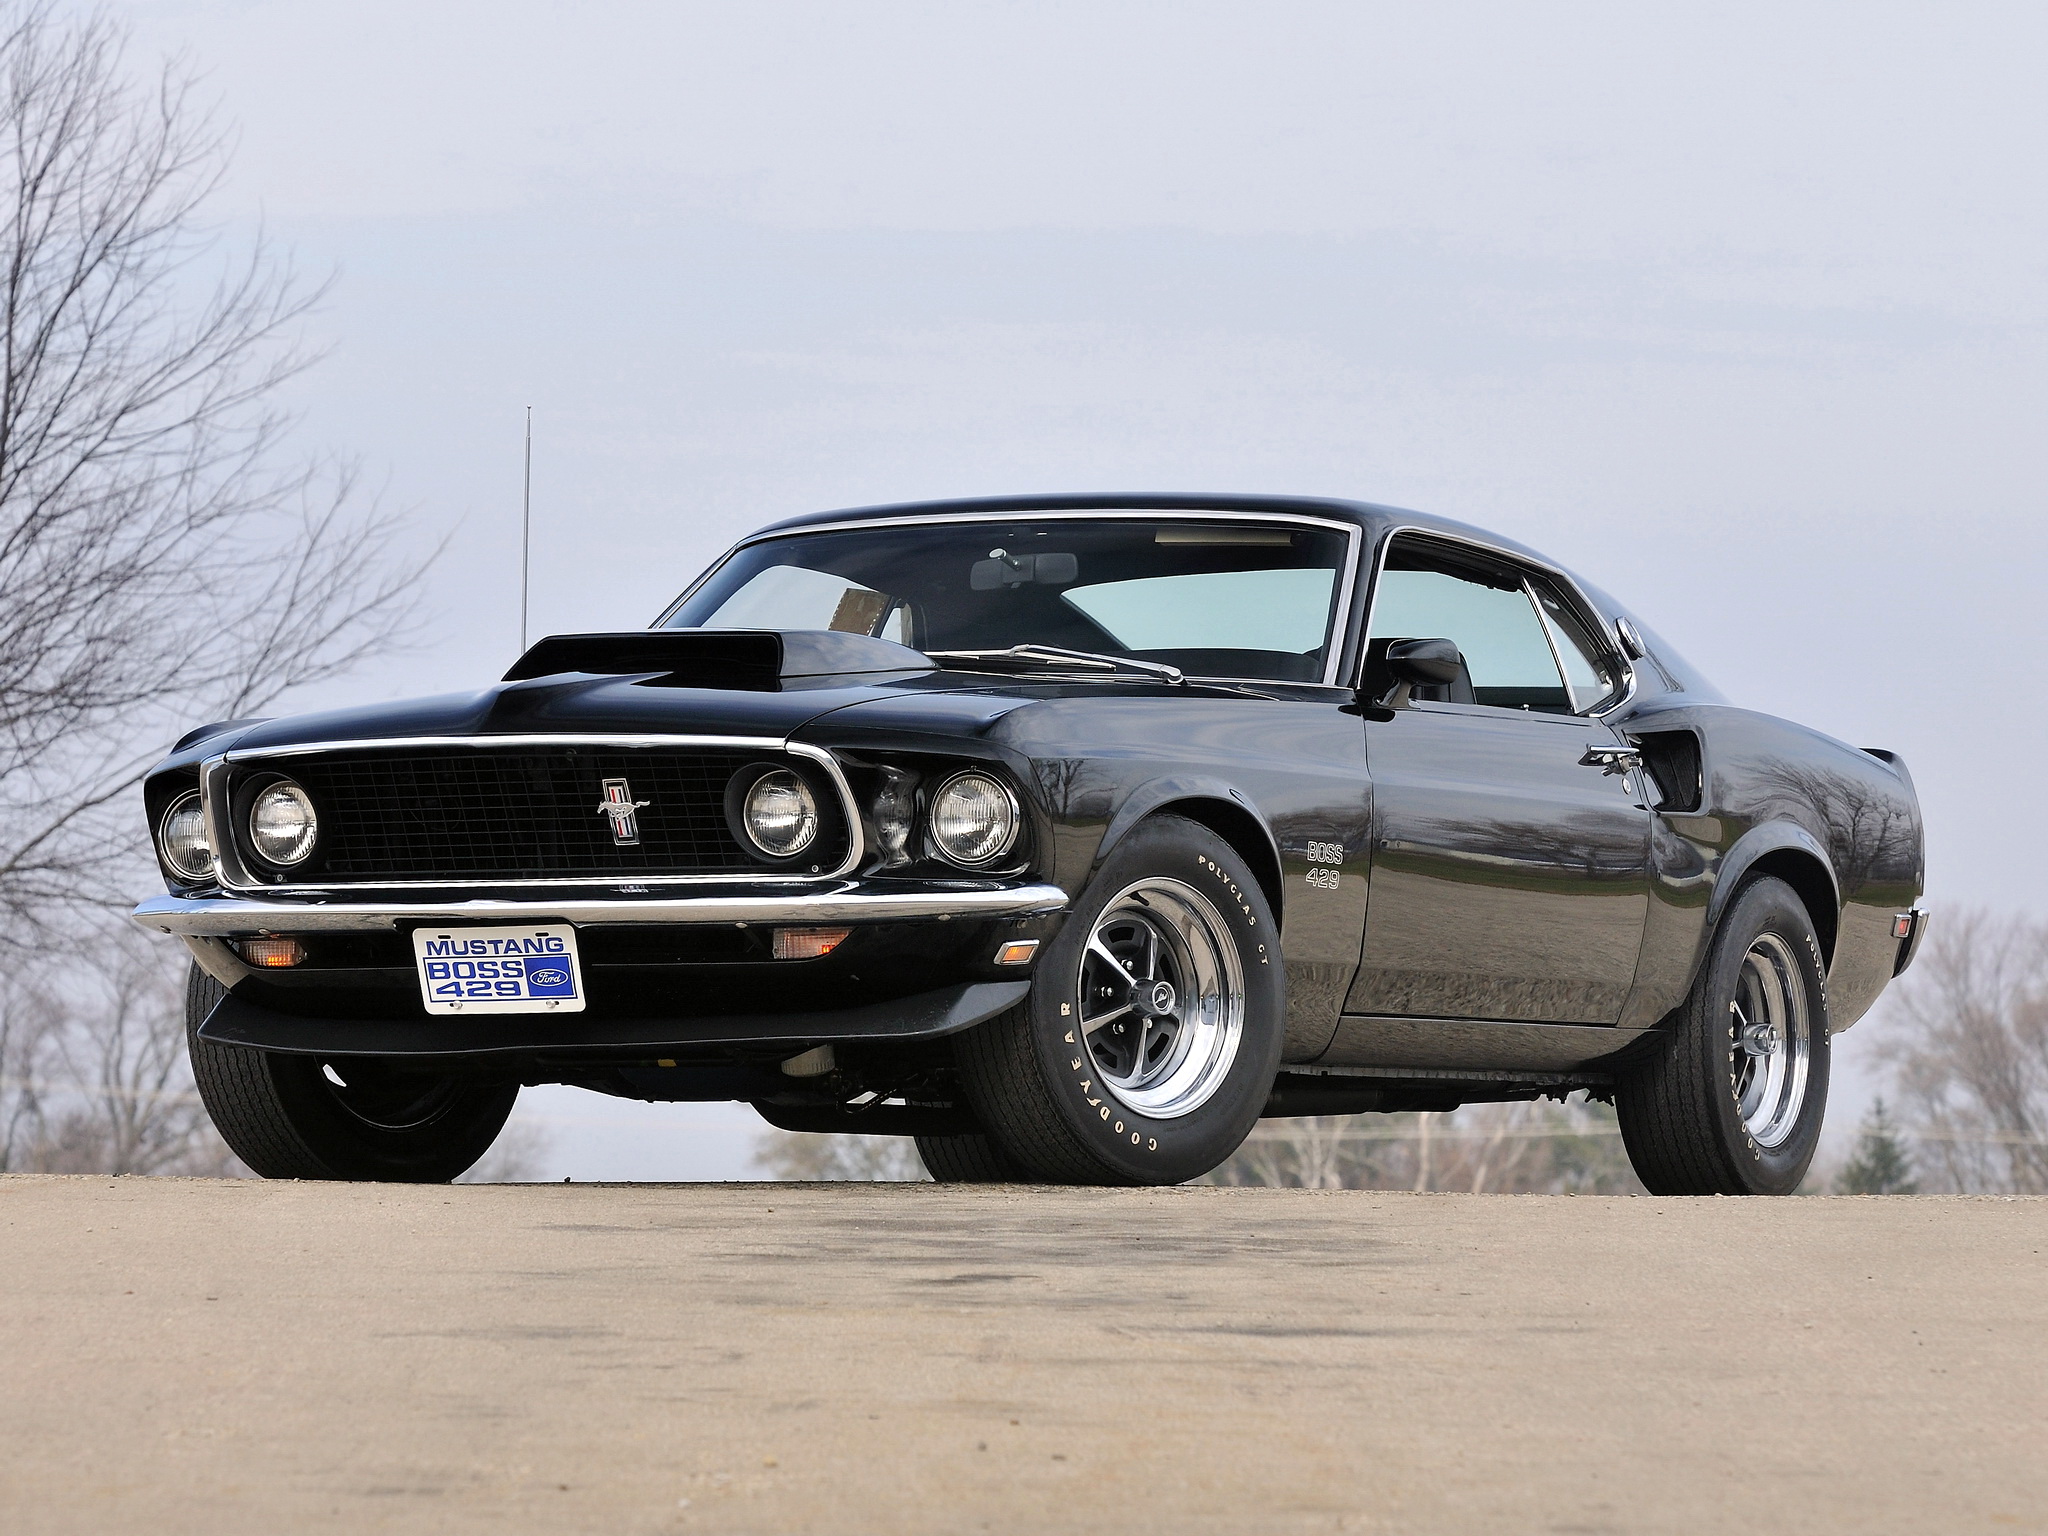 1969 Boss 429 Mustang black